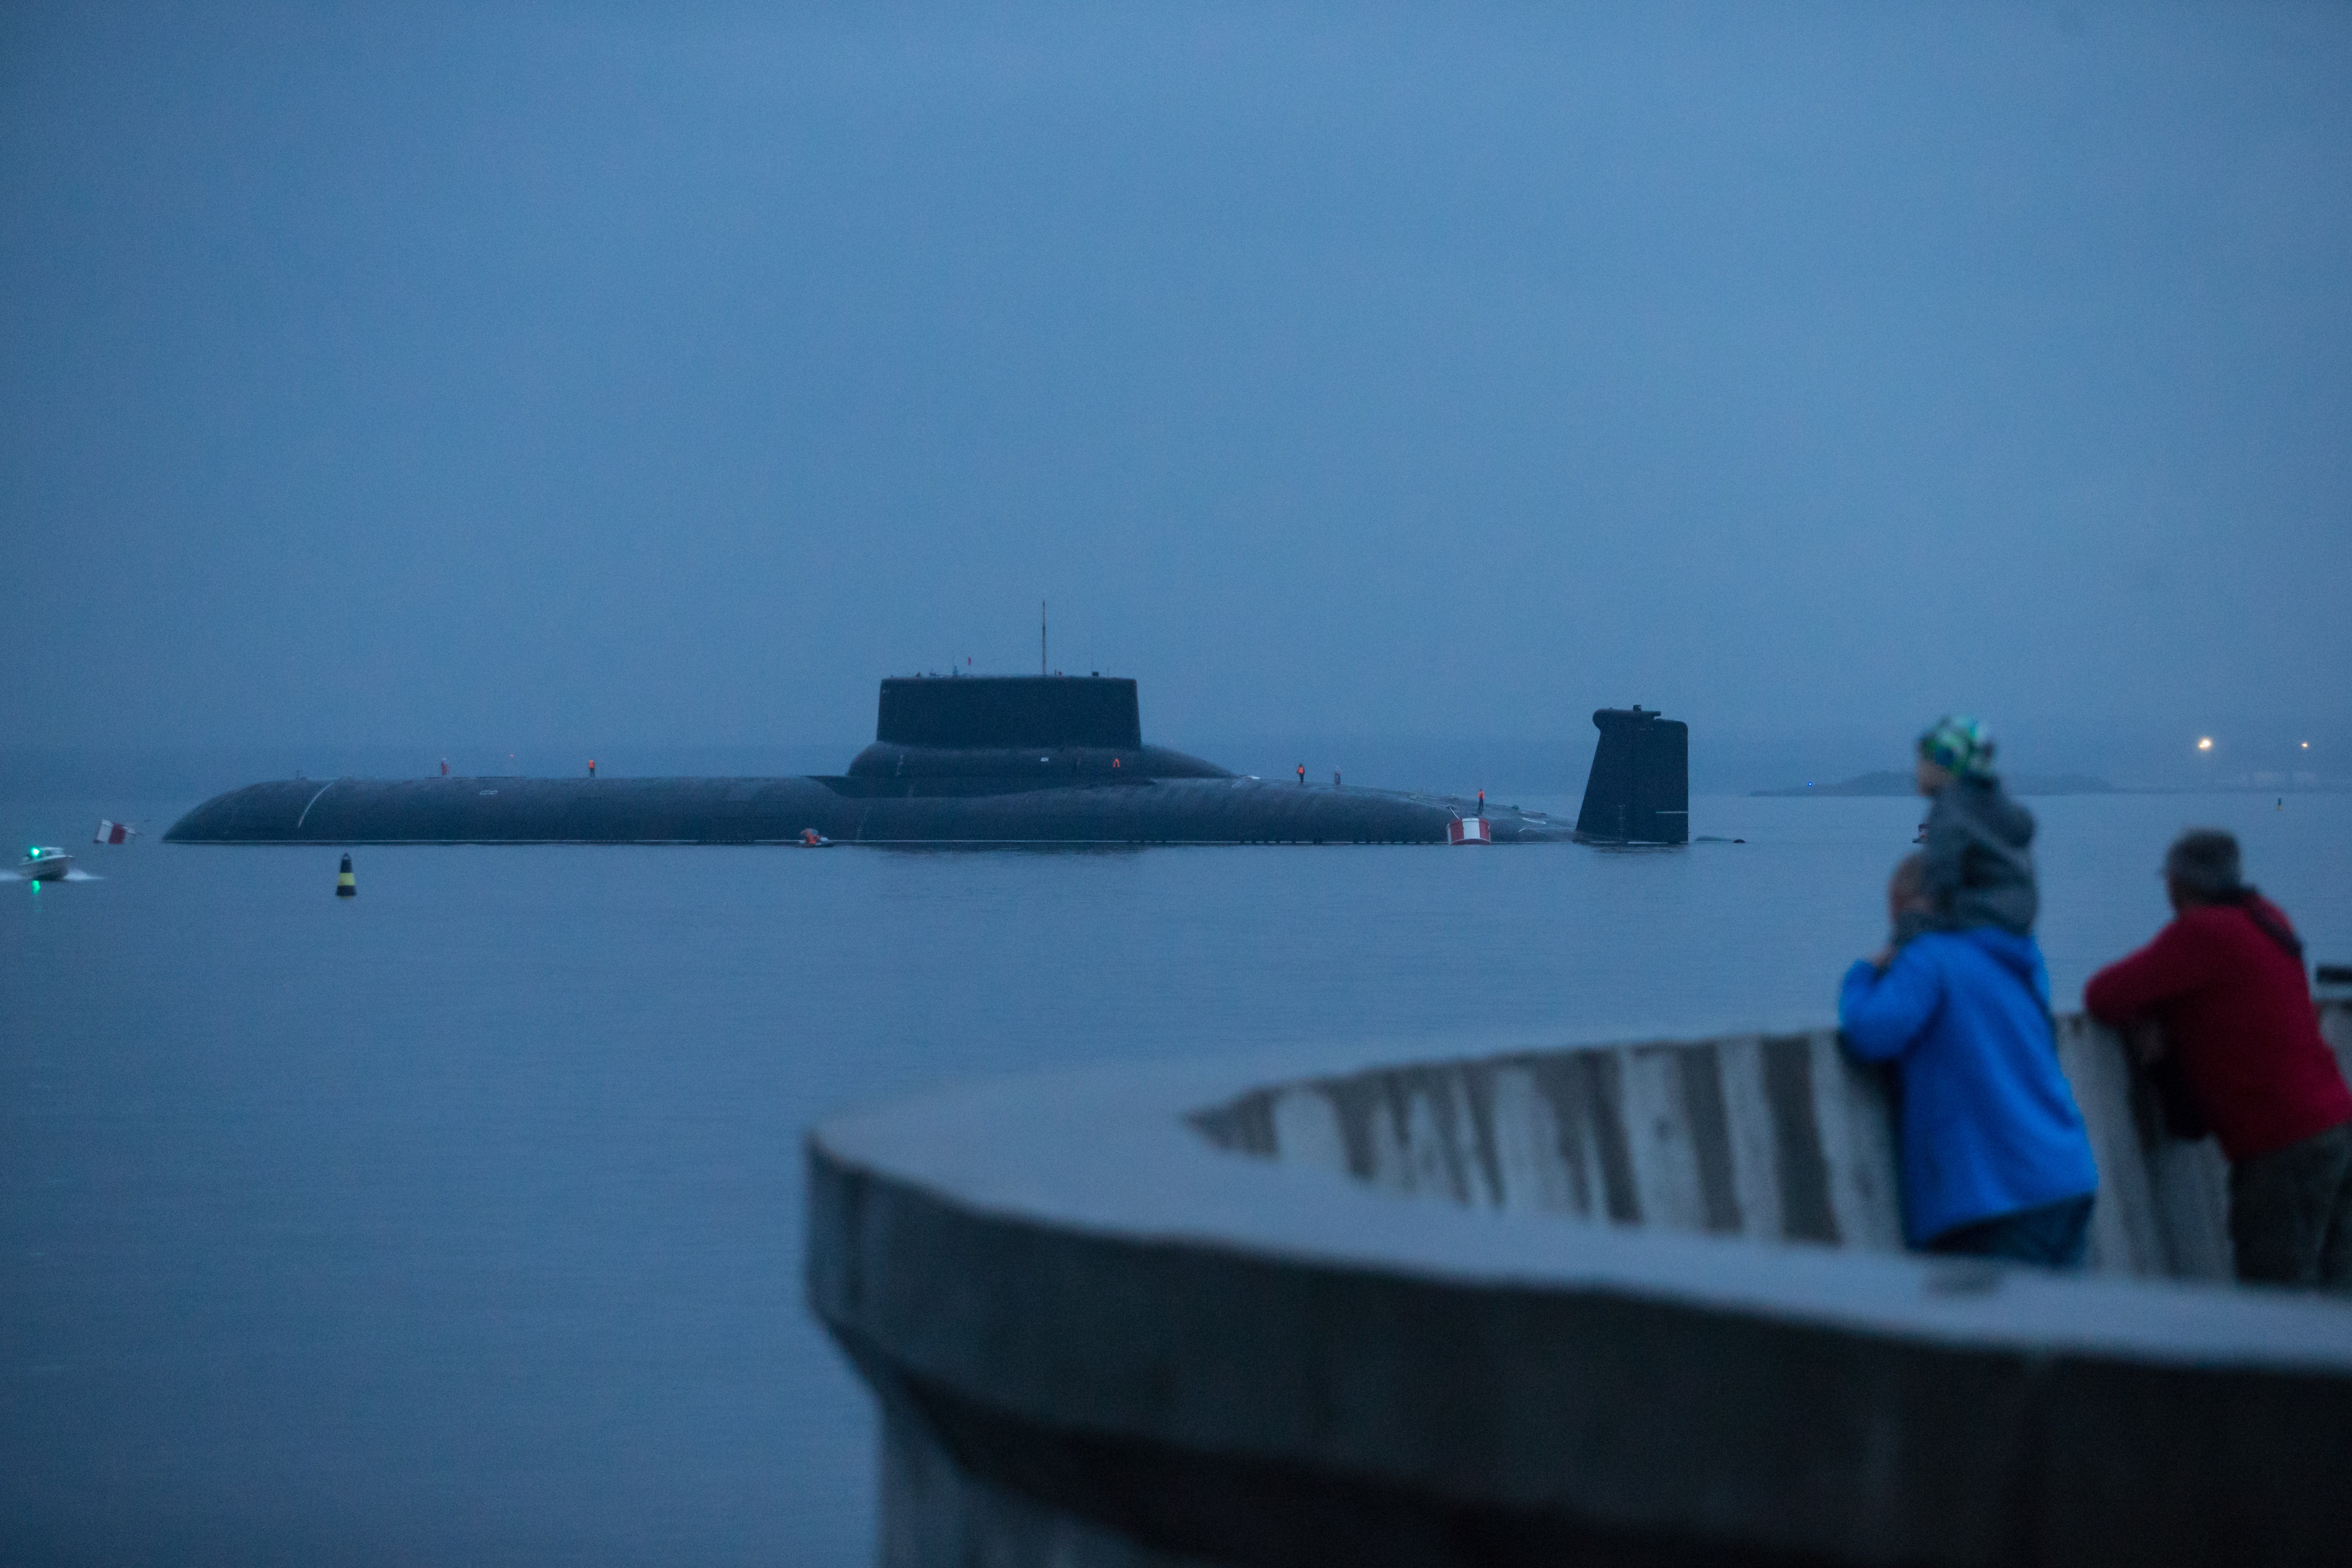 Putin launches latest nuclear submarine 'Emperor Alexander III' as part of new fleet